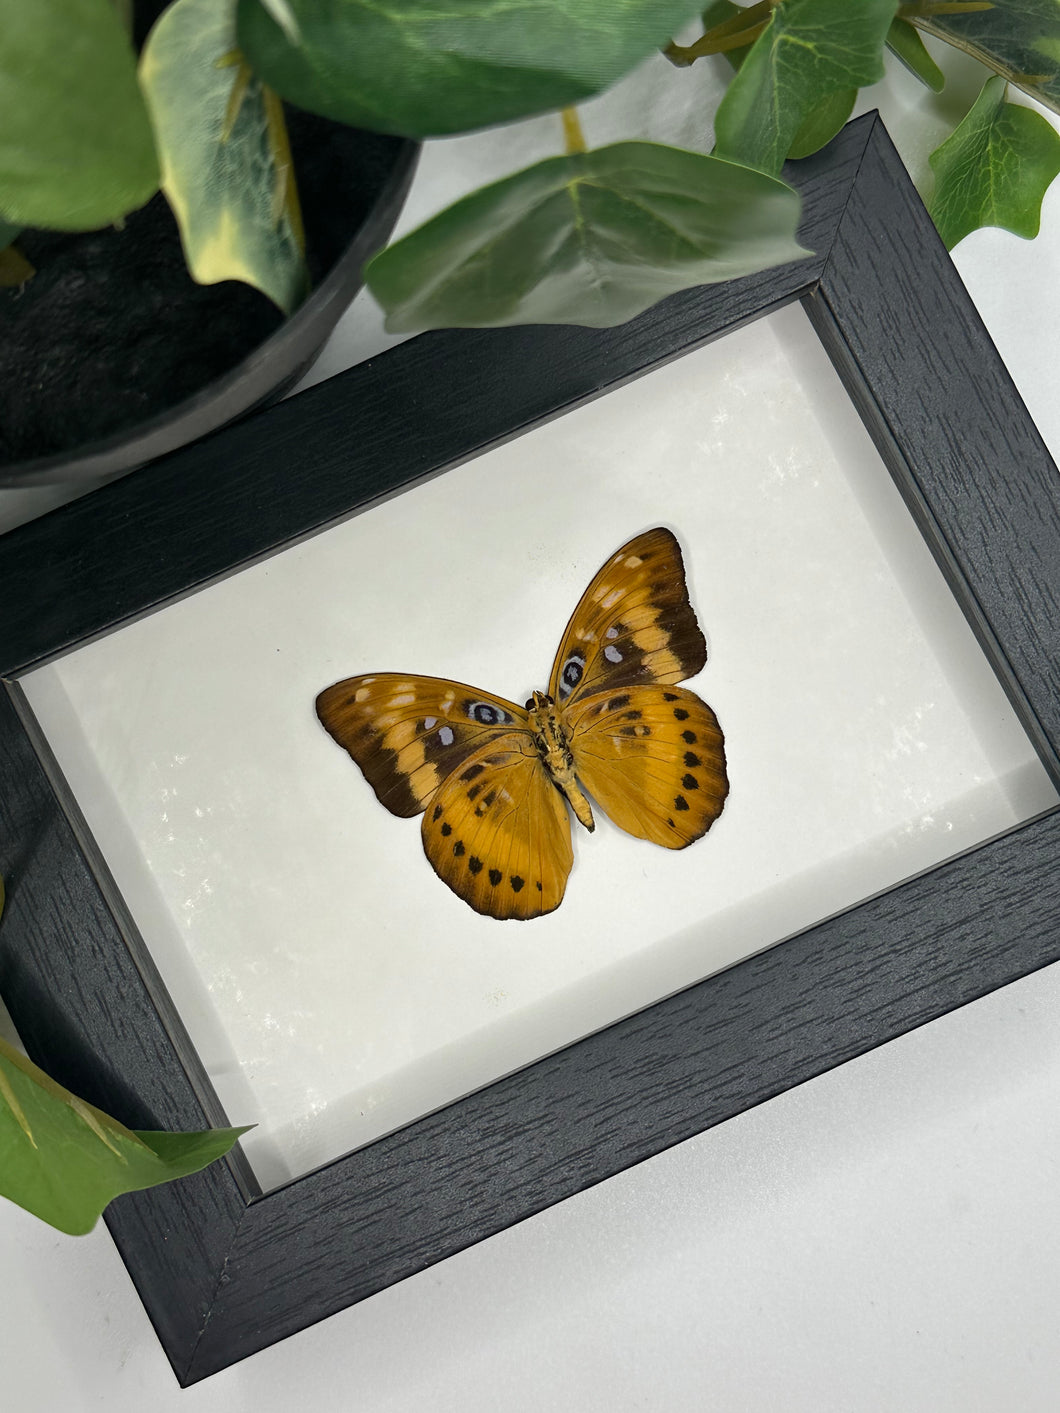 Lexias Aeropus Butterfly in a frame | Missing antennae